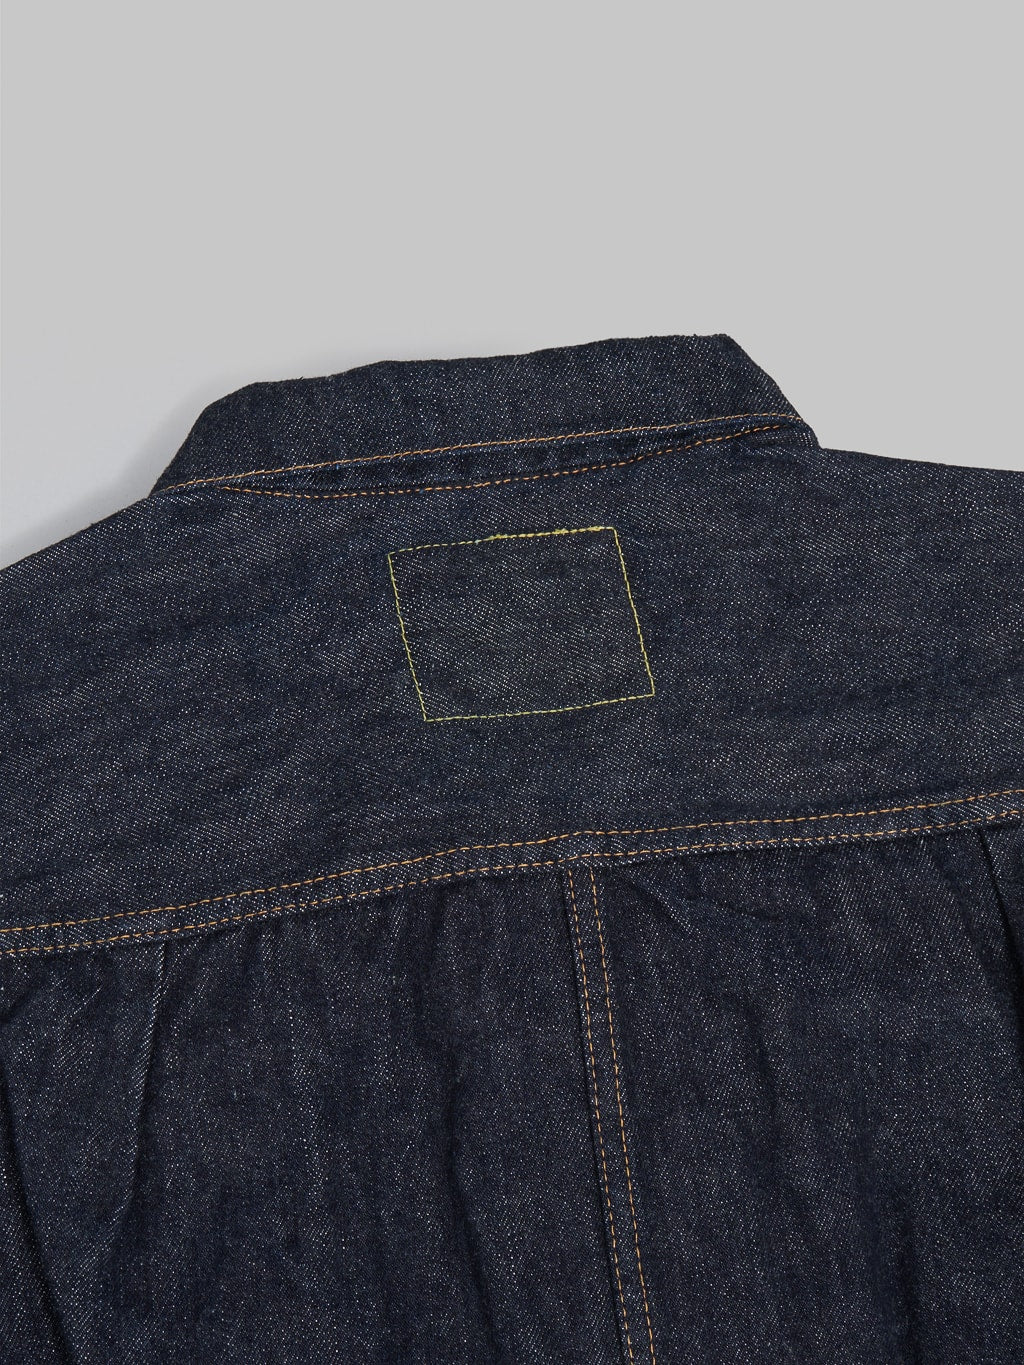 tcb 30s denim jacket collar back stitching